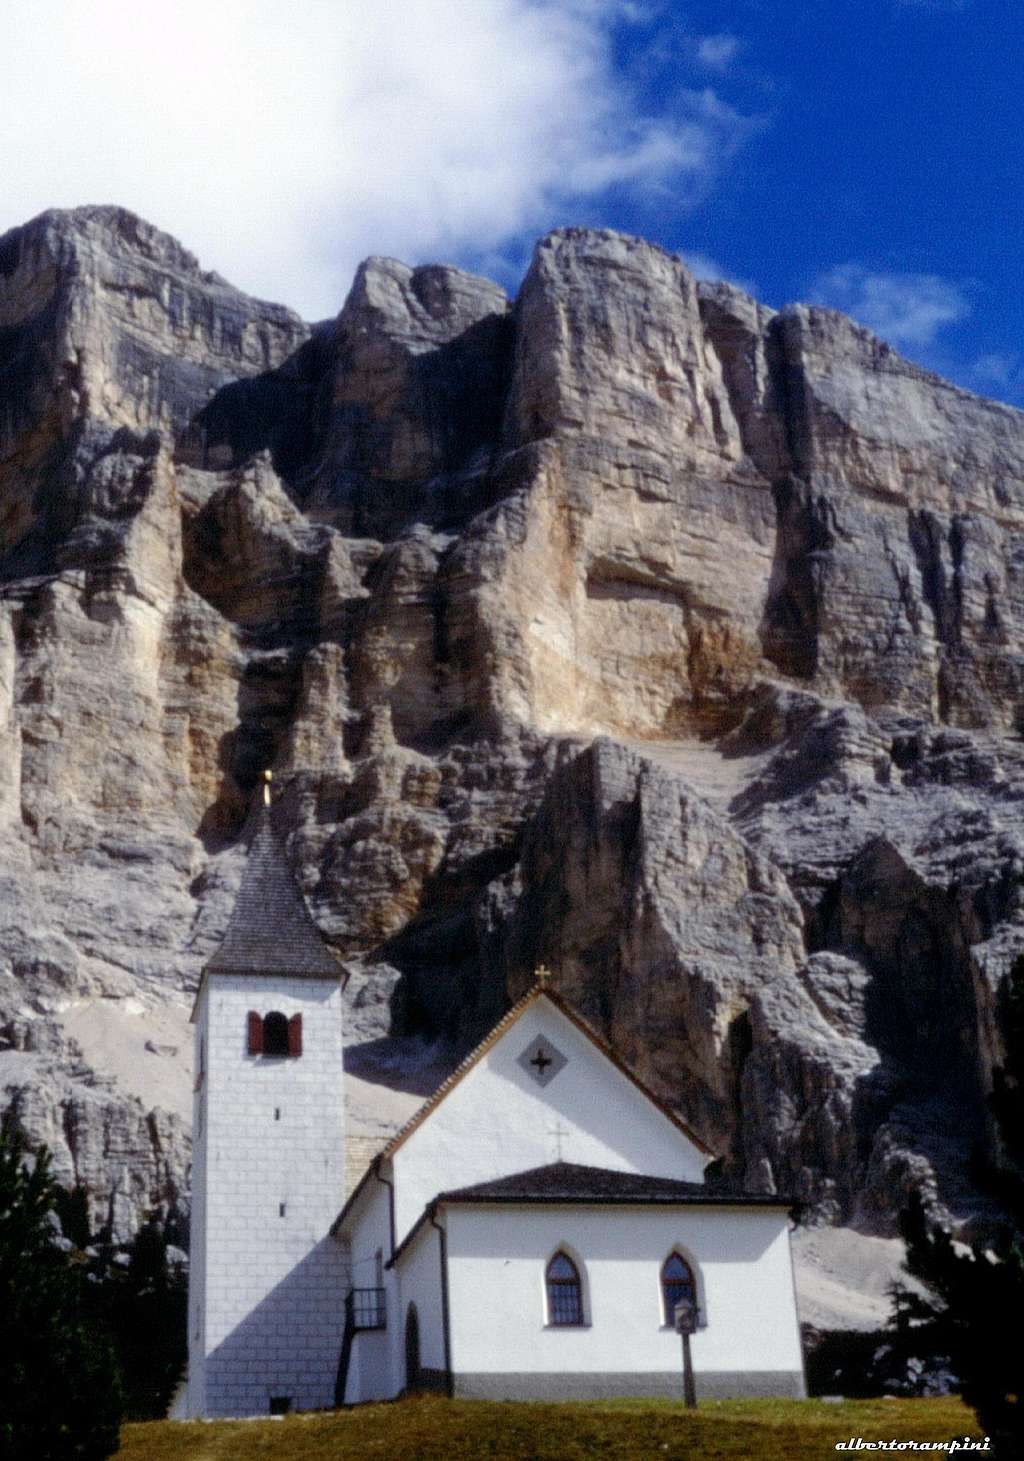 Heiligkreuz Hospiz (Ospizio di Santa Croce) against the backdrop of the impressive West wall